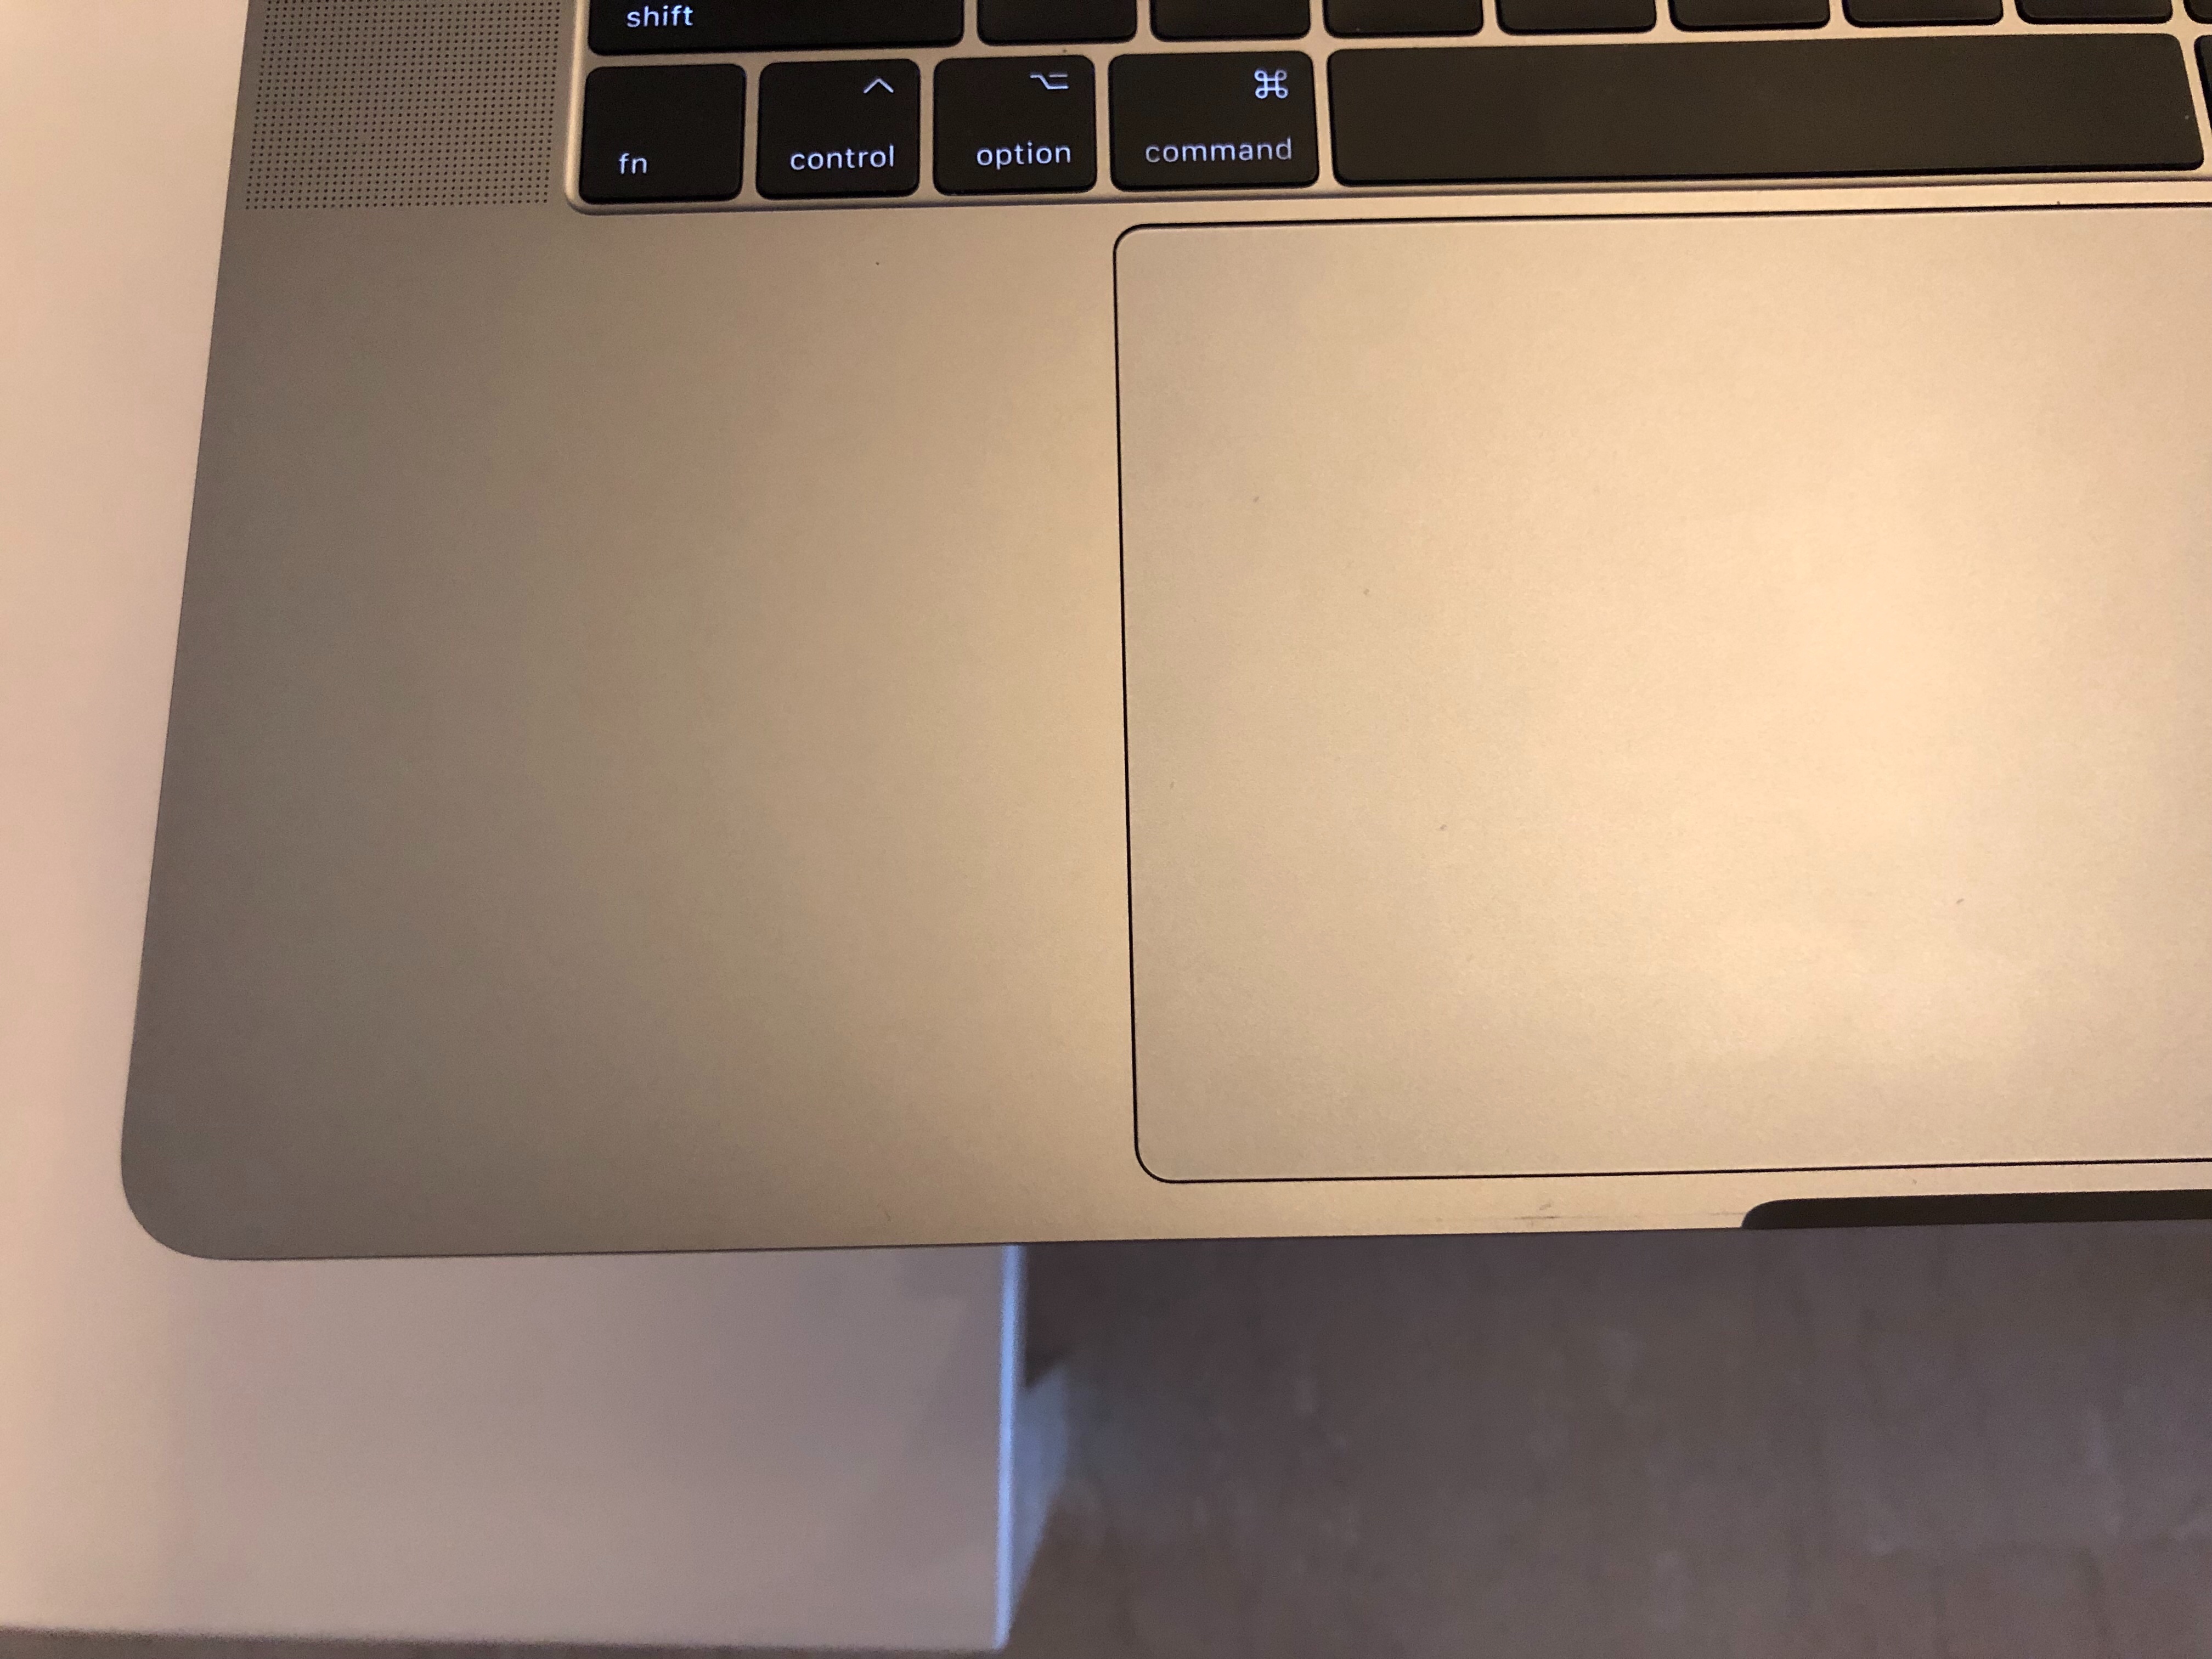 Rubber Gasket surrounding 2017 MacBook Pr… - Apple Community